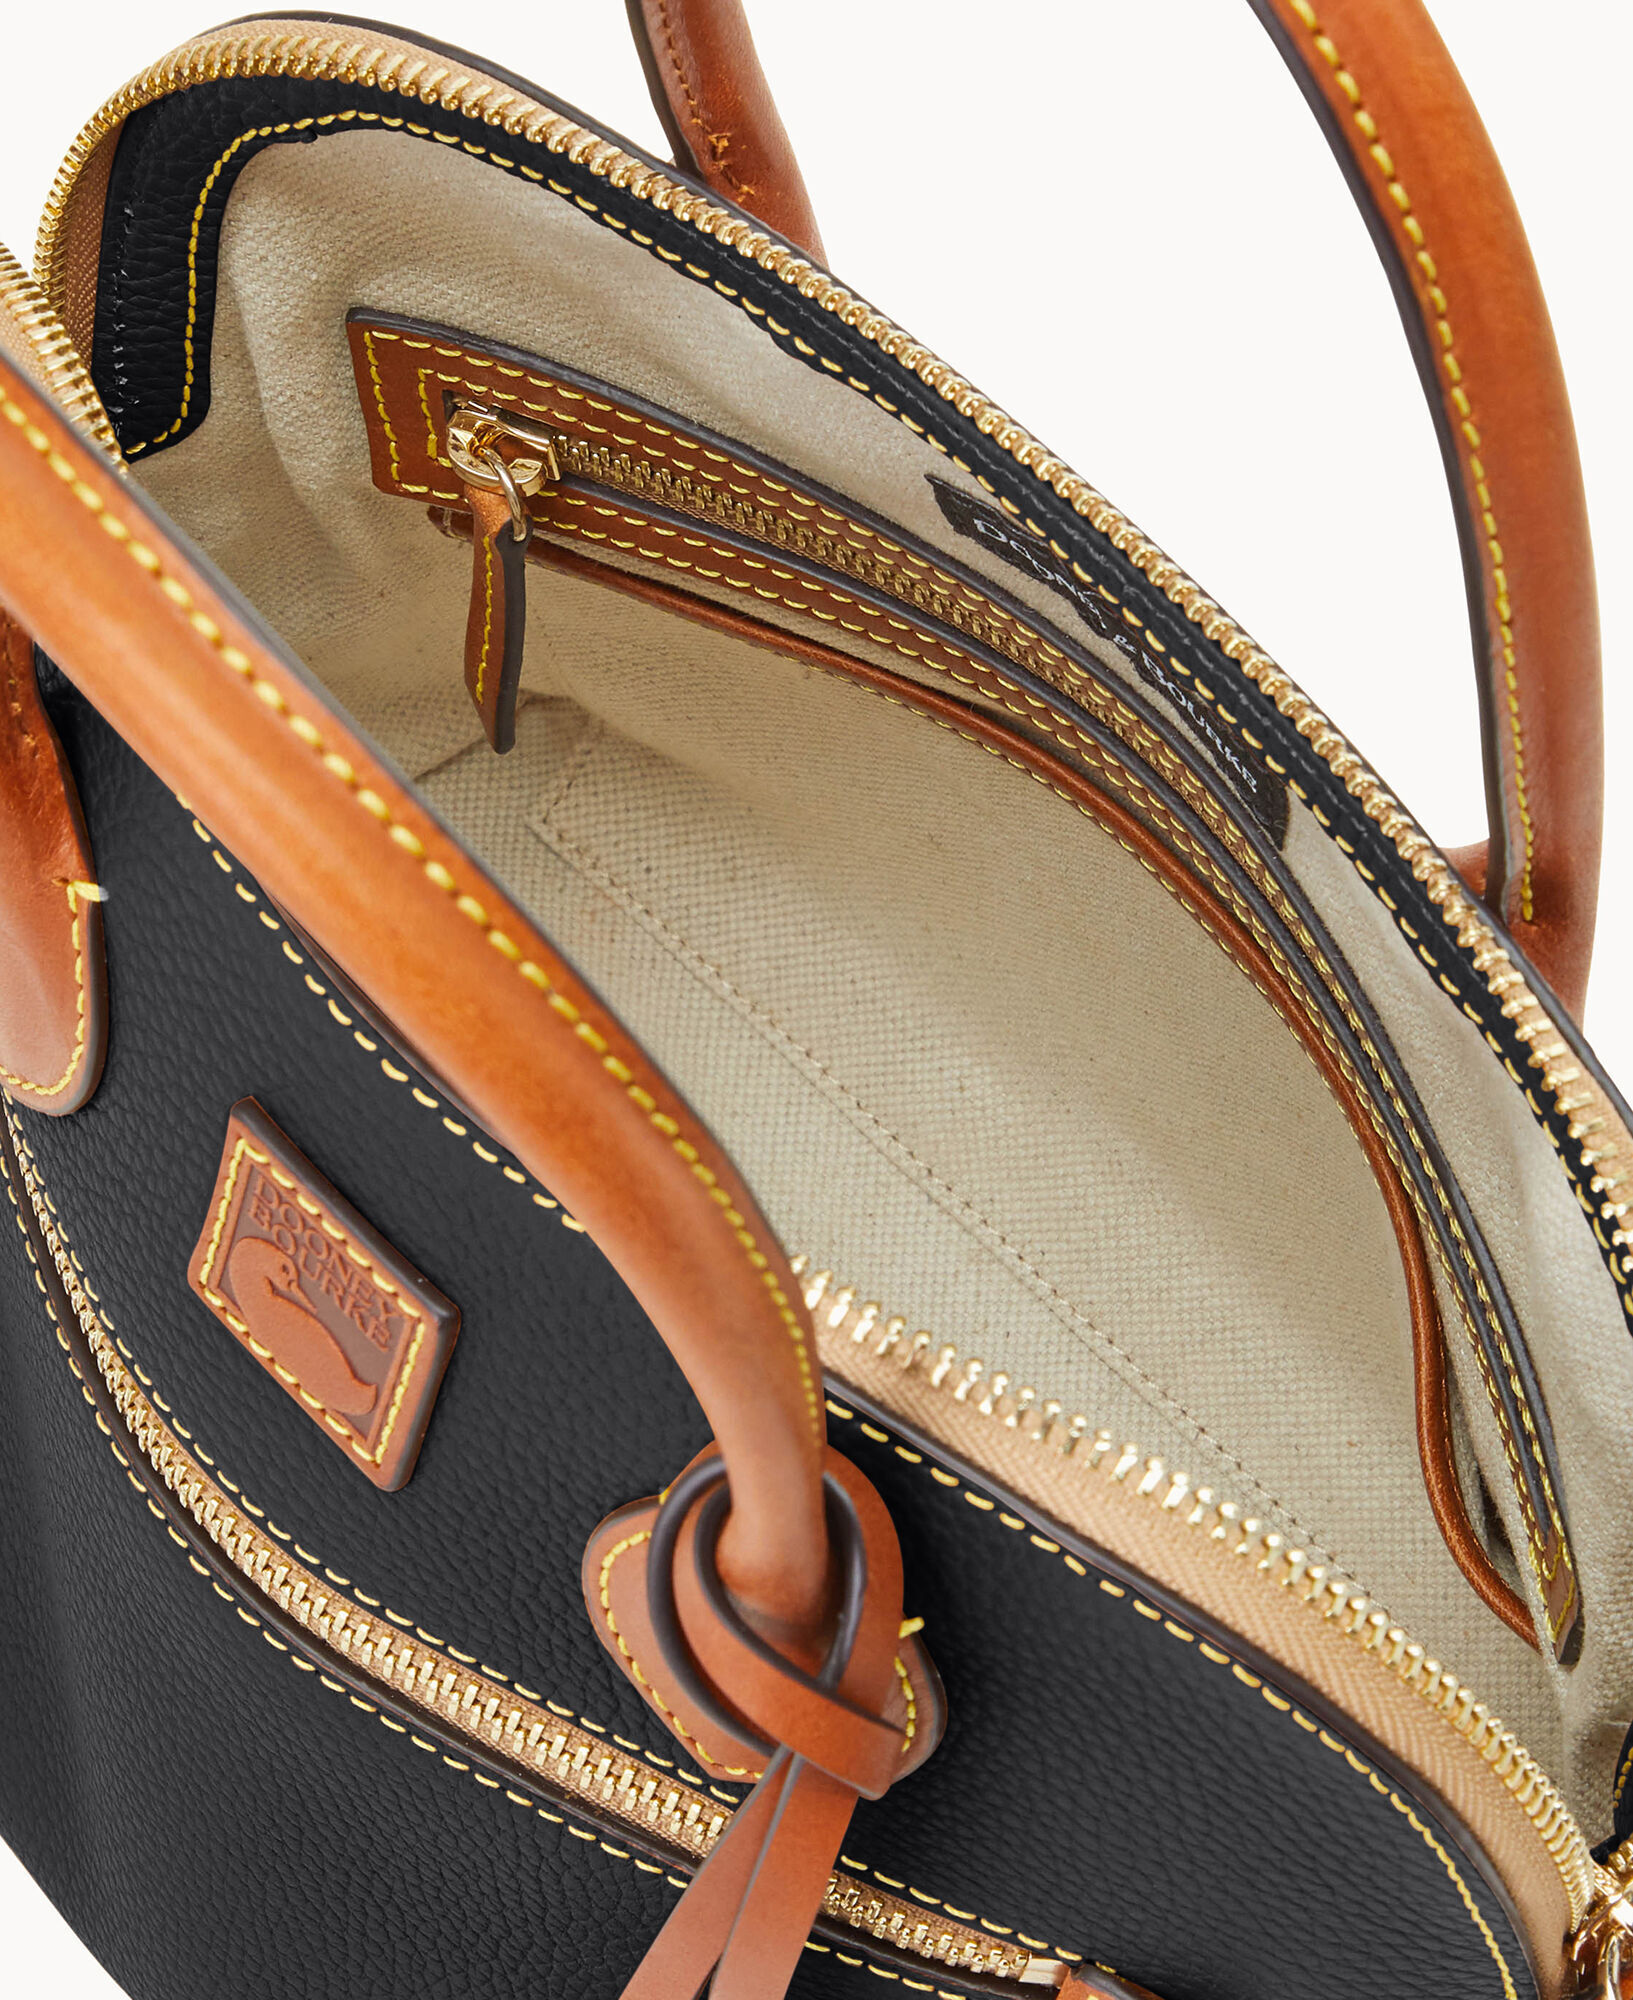 Dooney & Bourke - Quality Handbags Made In USA